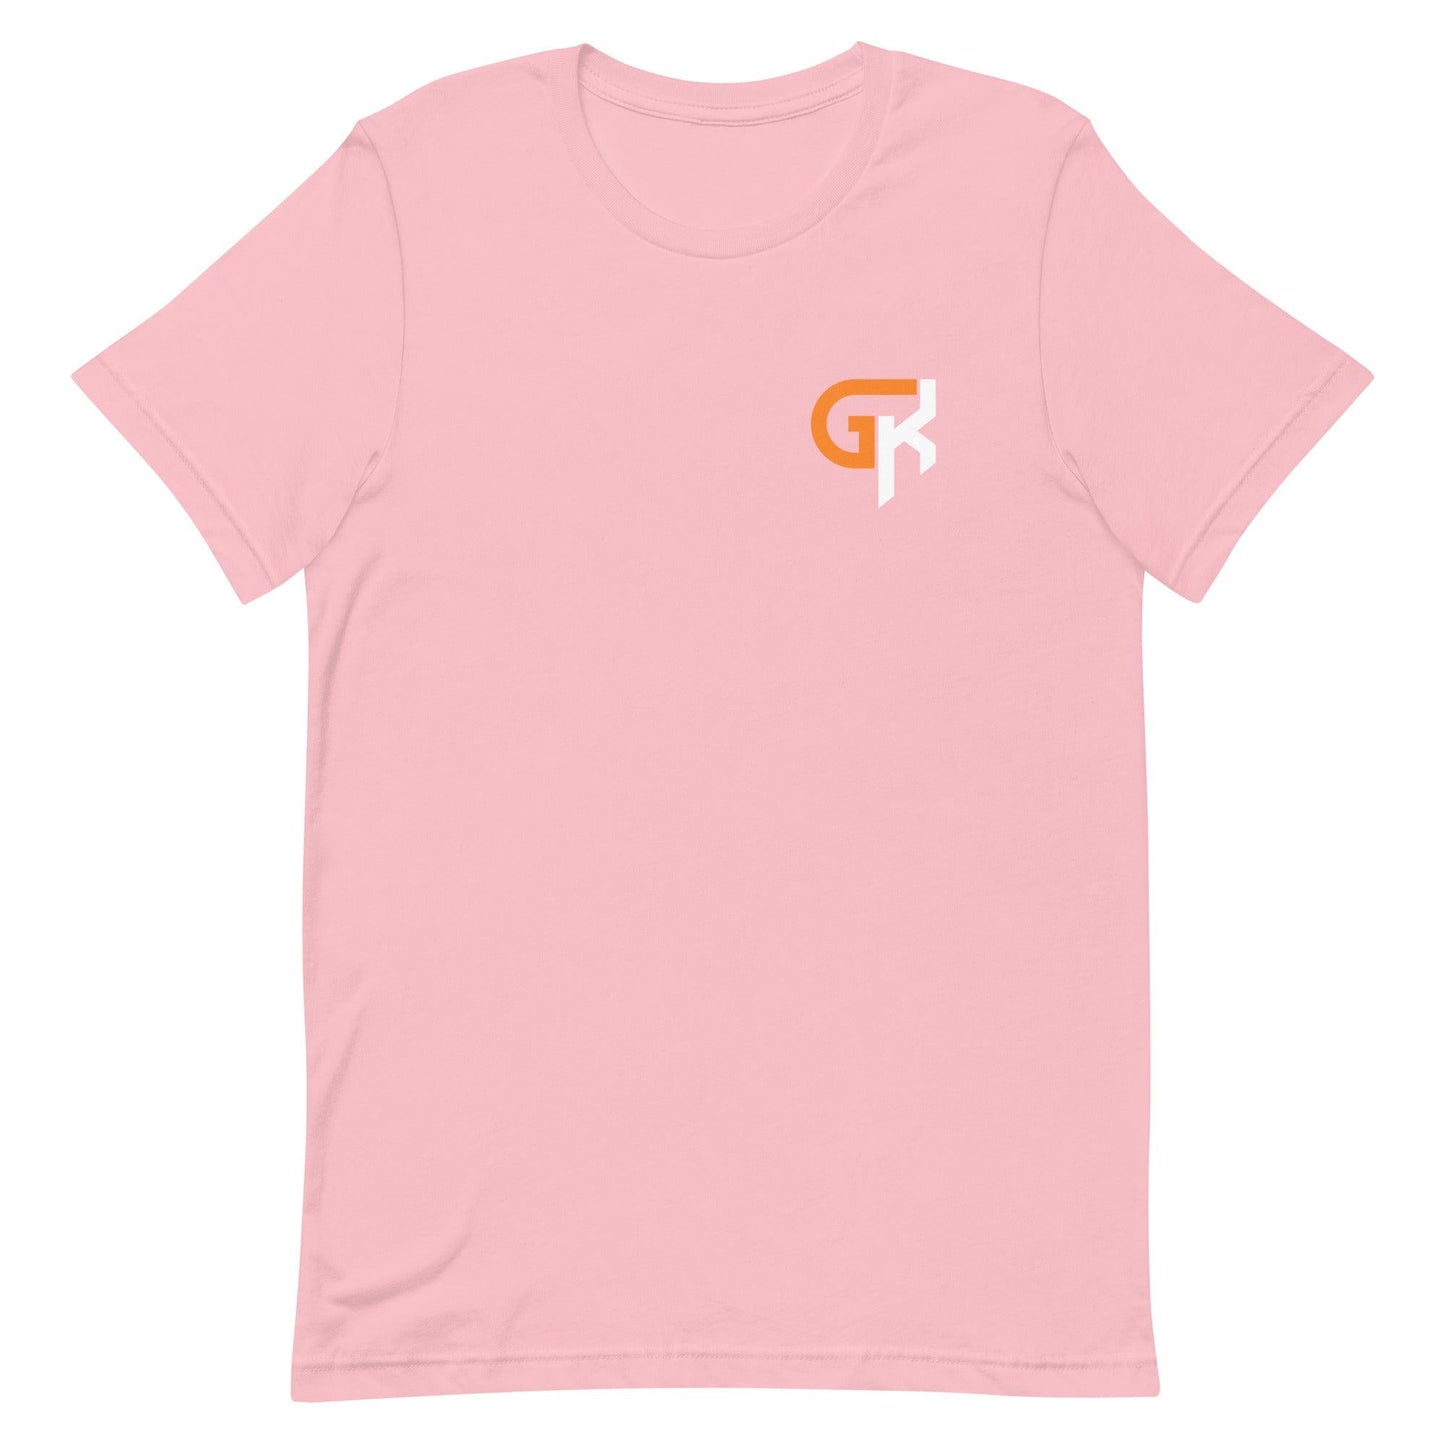 Grant Knipp "Signature" t-shirt - Fan Arch